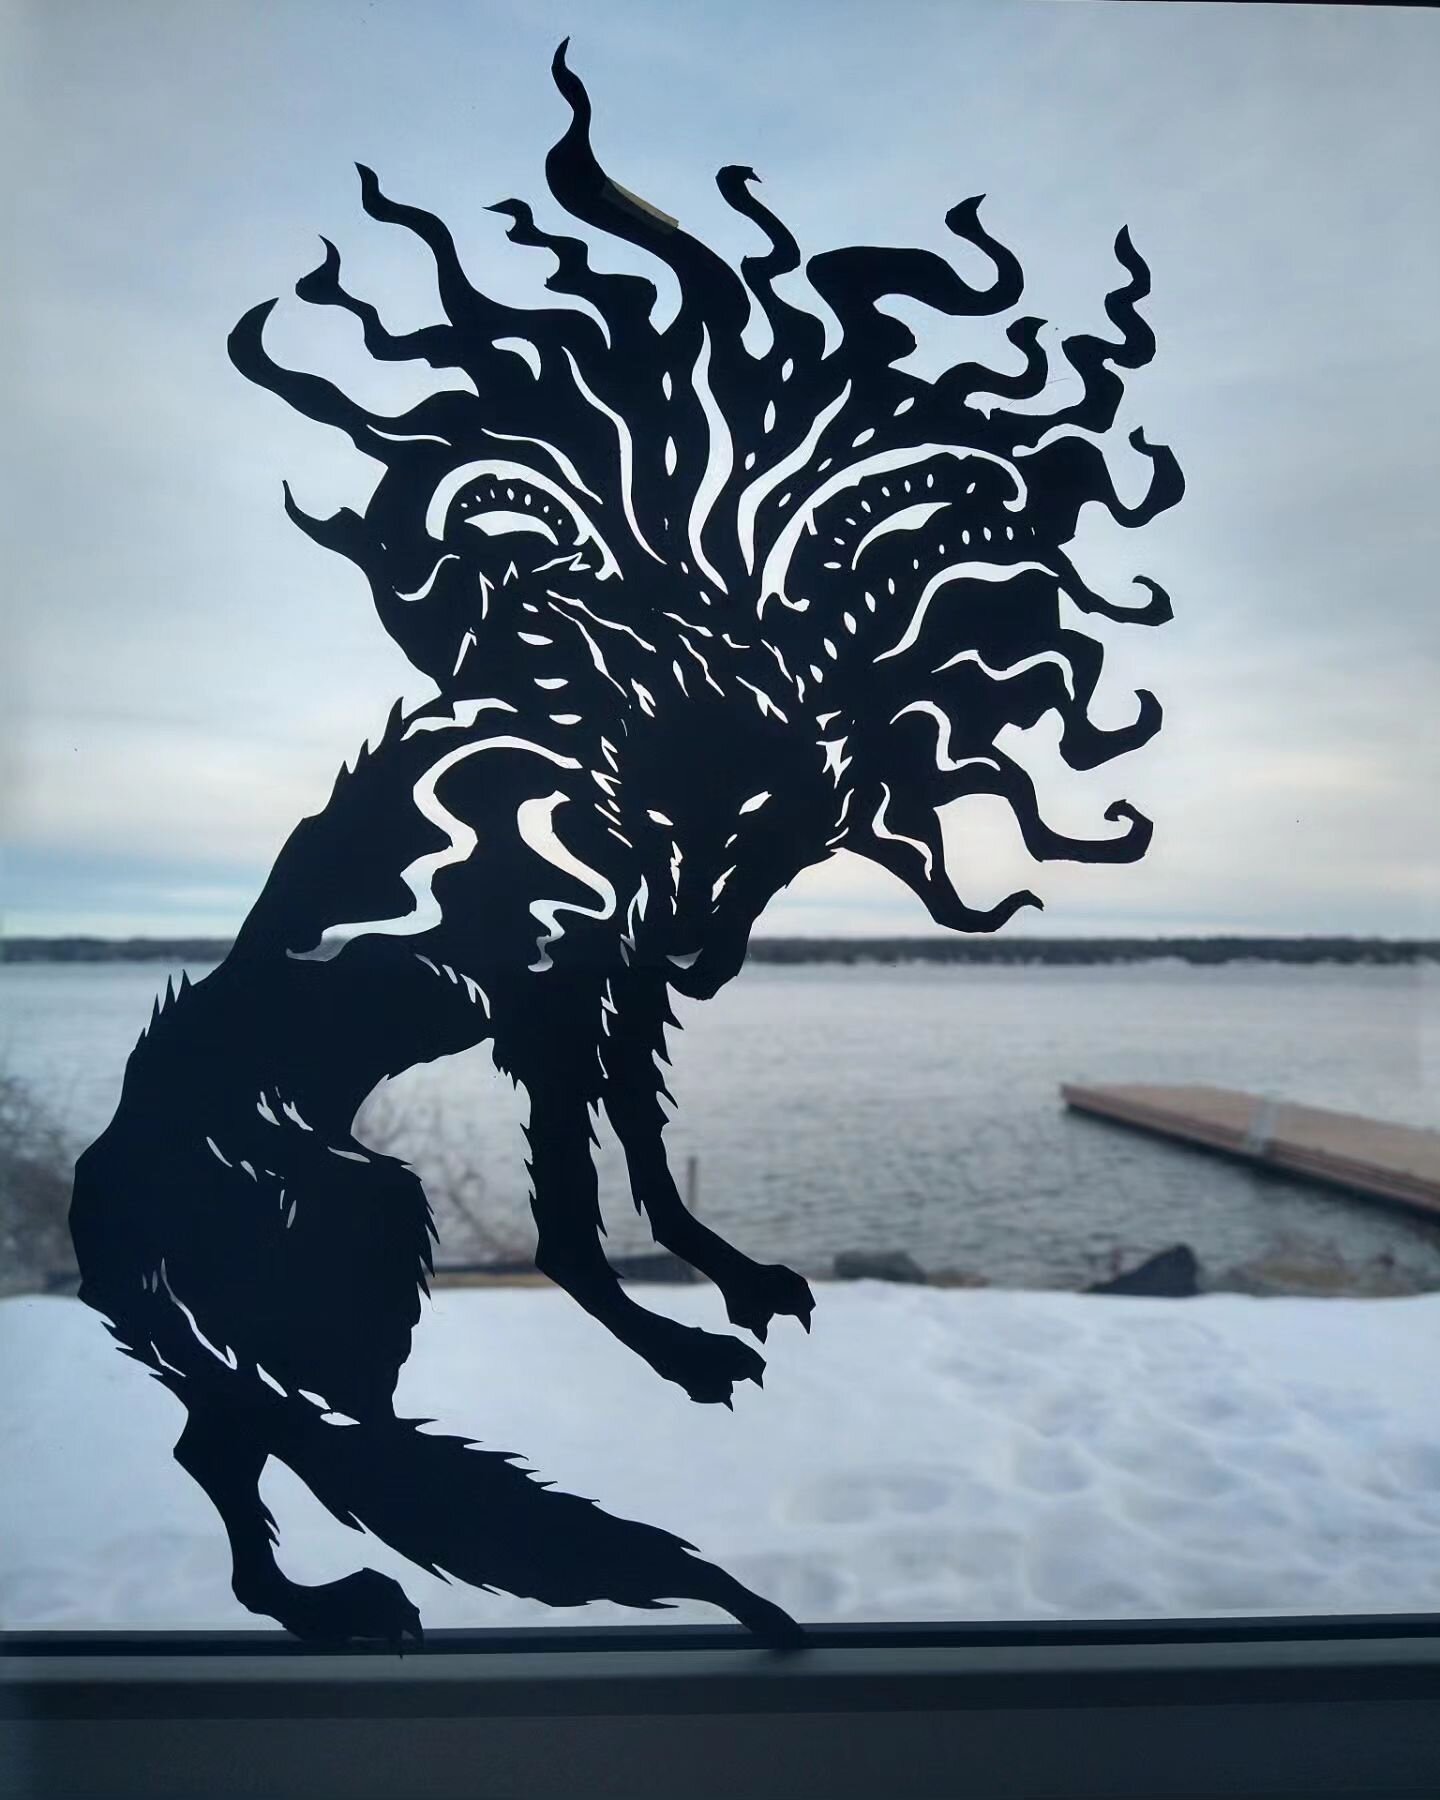 Sun wolf puppet by Aleksandra Bragoszewska 

@maitlandtower @canada.council @cfrcmusic #BirdboneTheatre #BringingTheArtsToLife #shadowpuppets #ygkarts